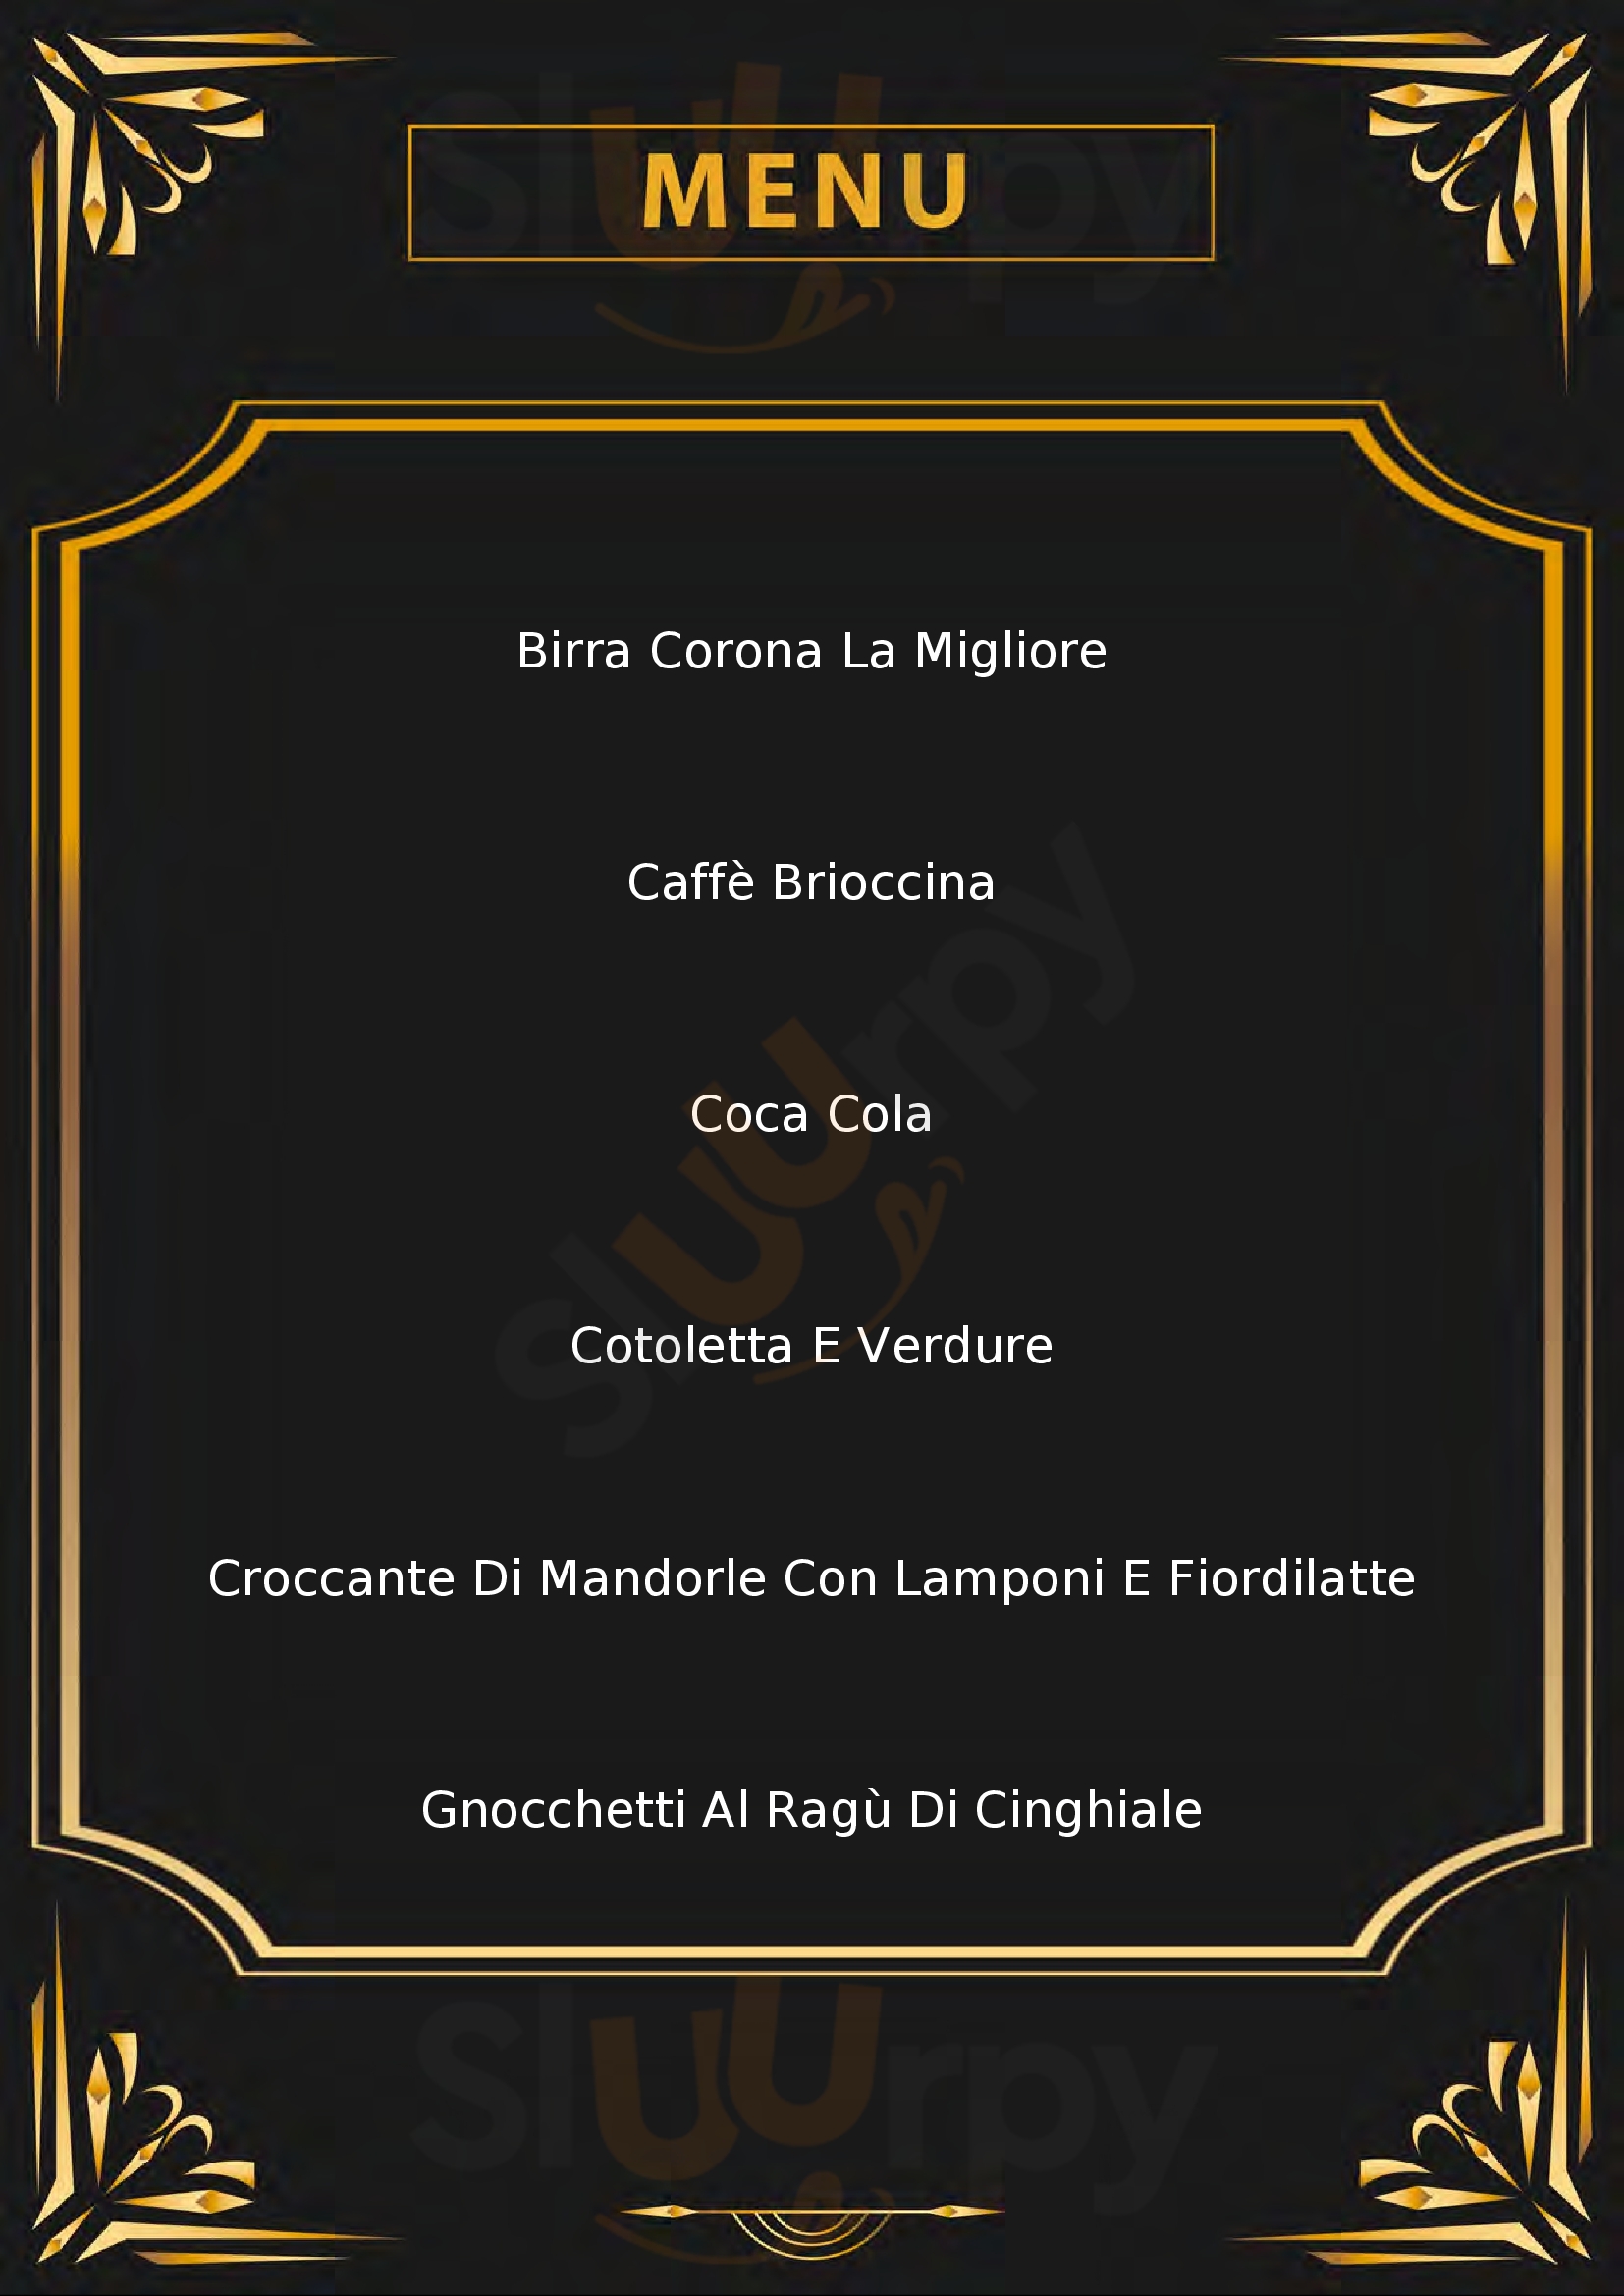 Pizzaclub Gourmet Milano menù 1 pagina